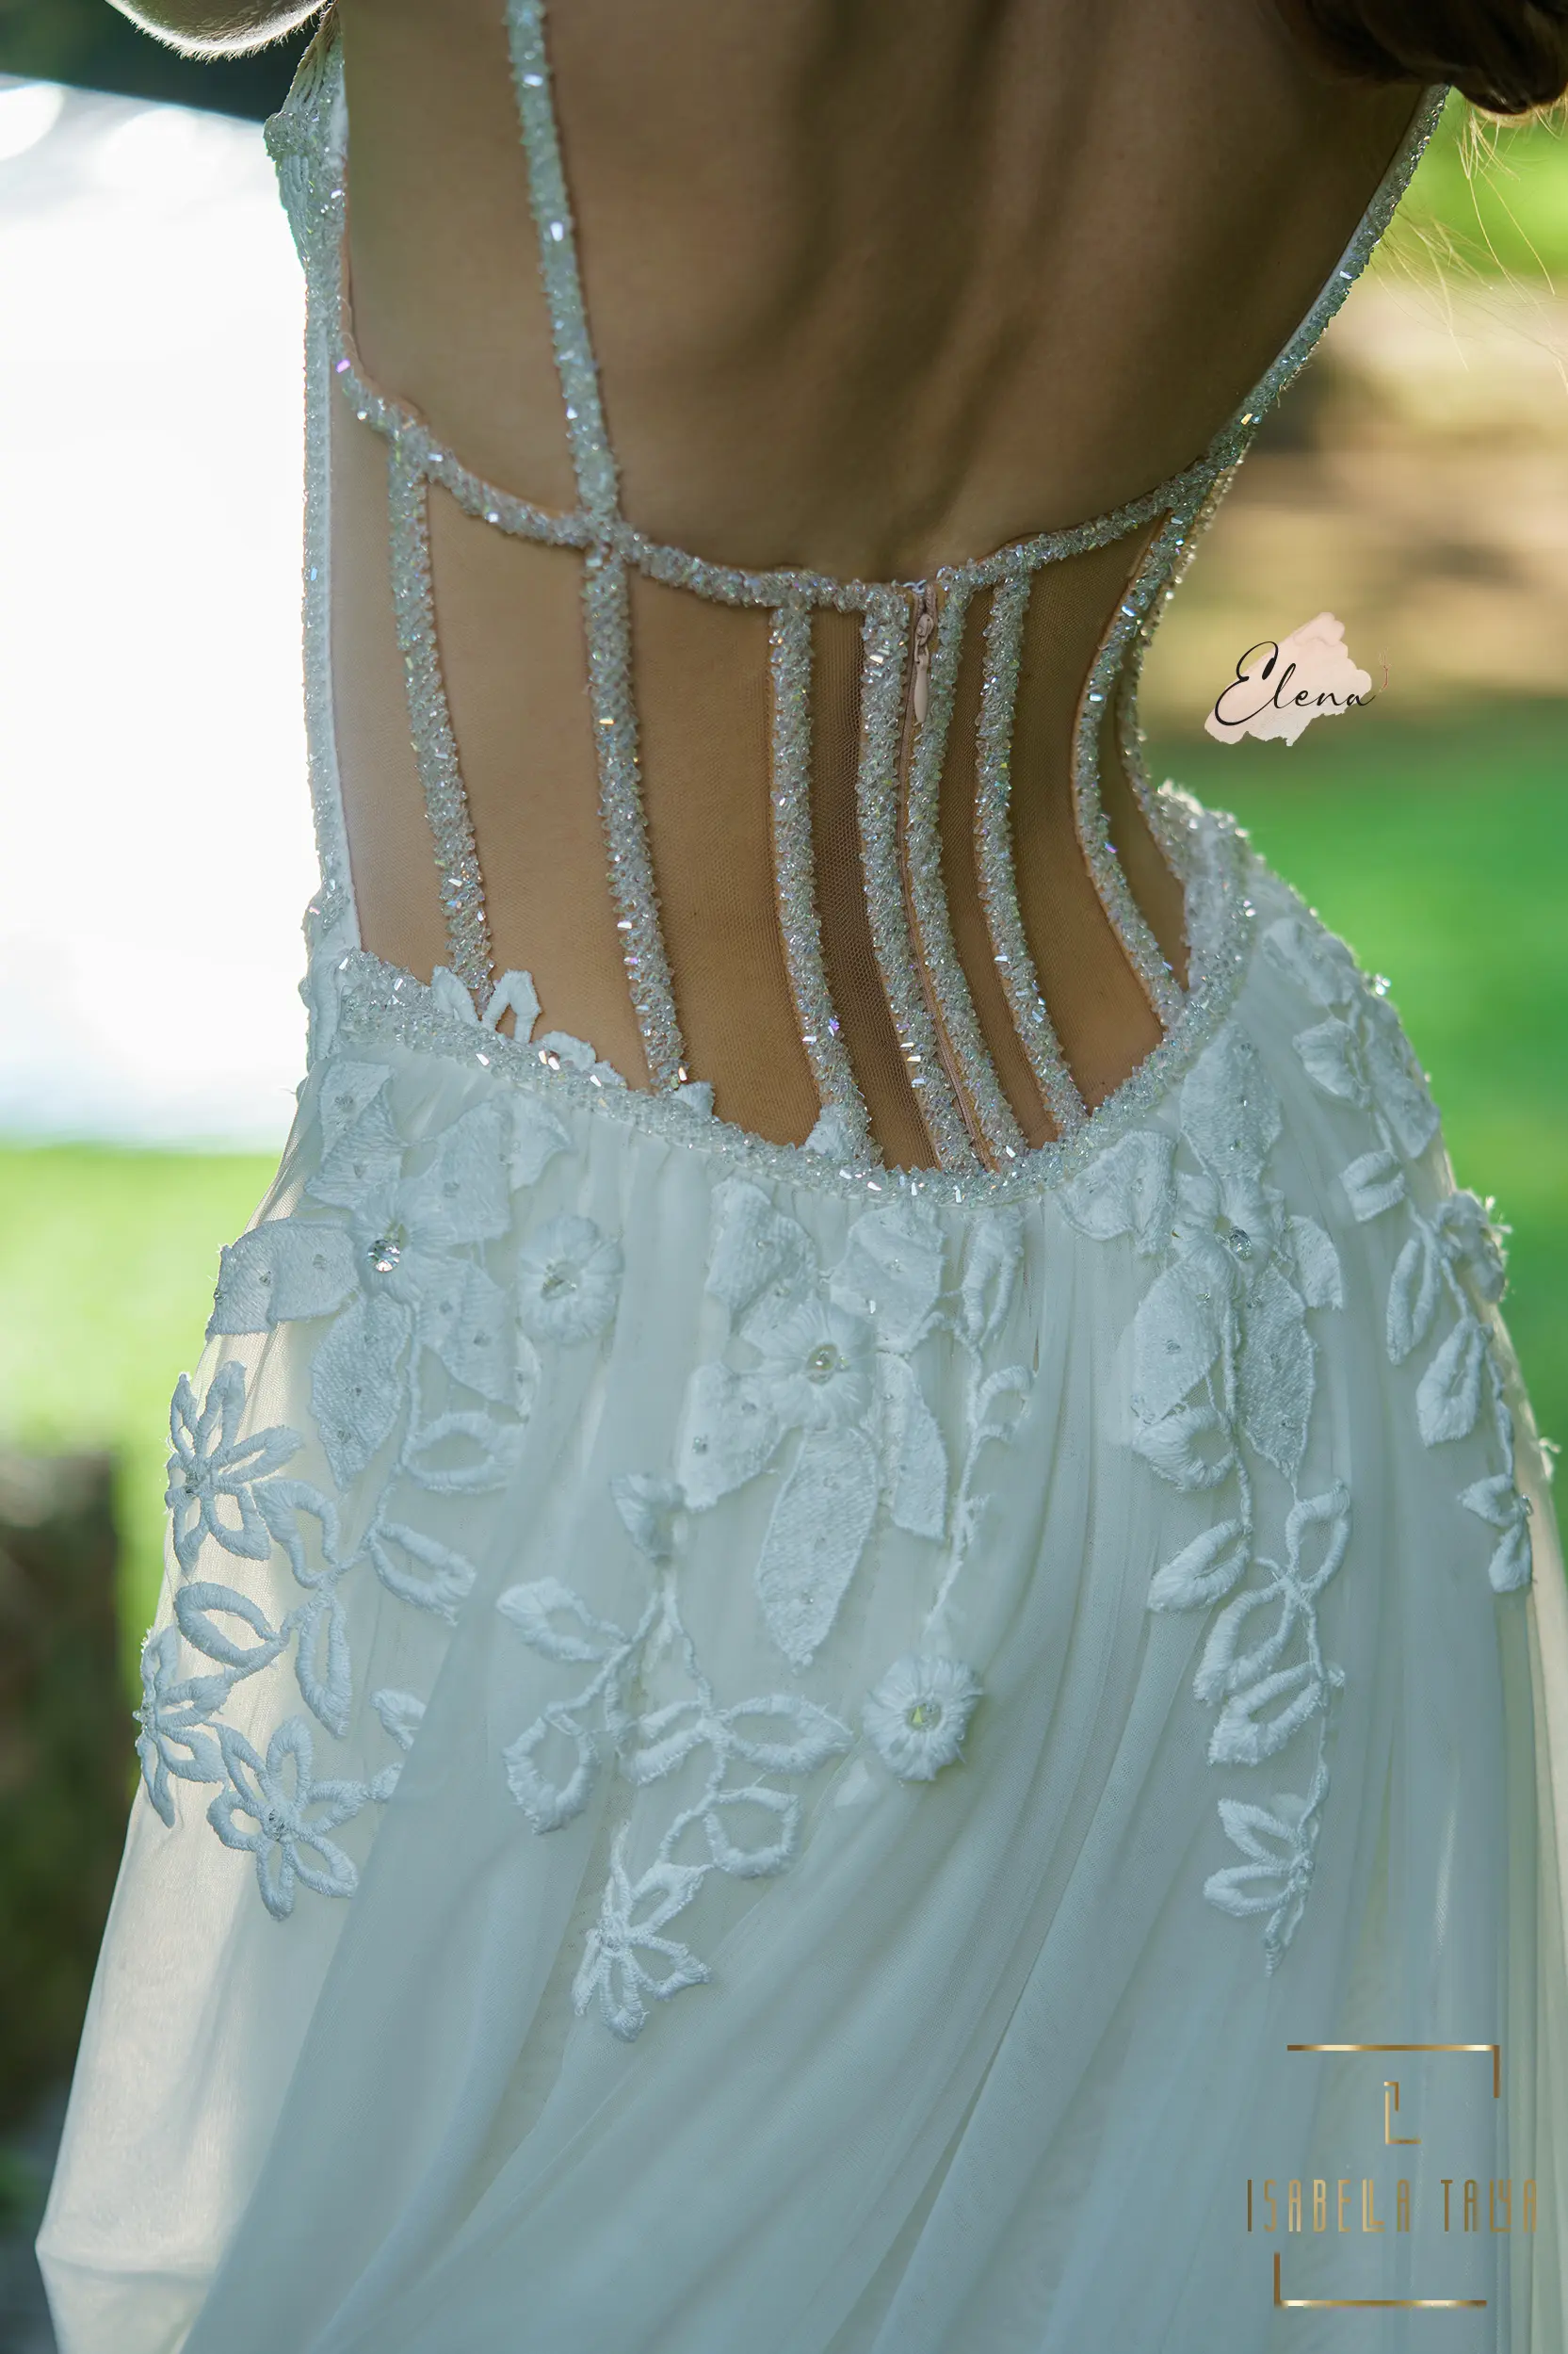 bridal gown design